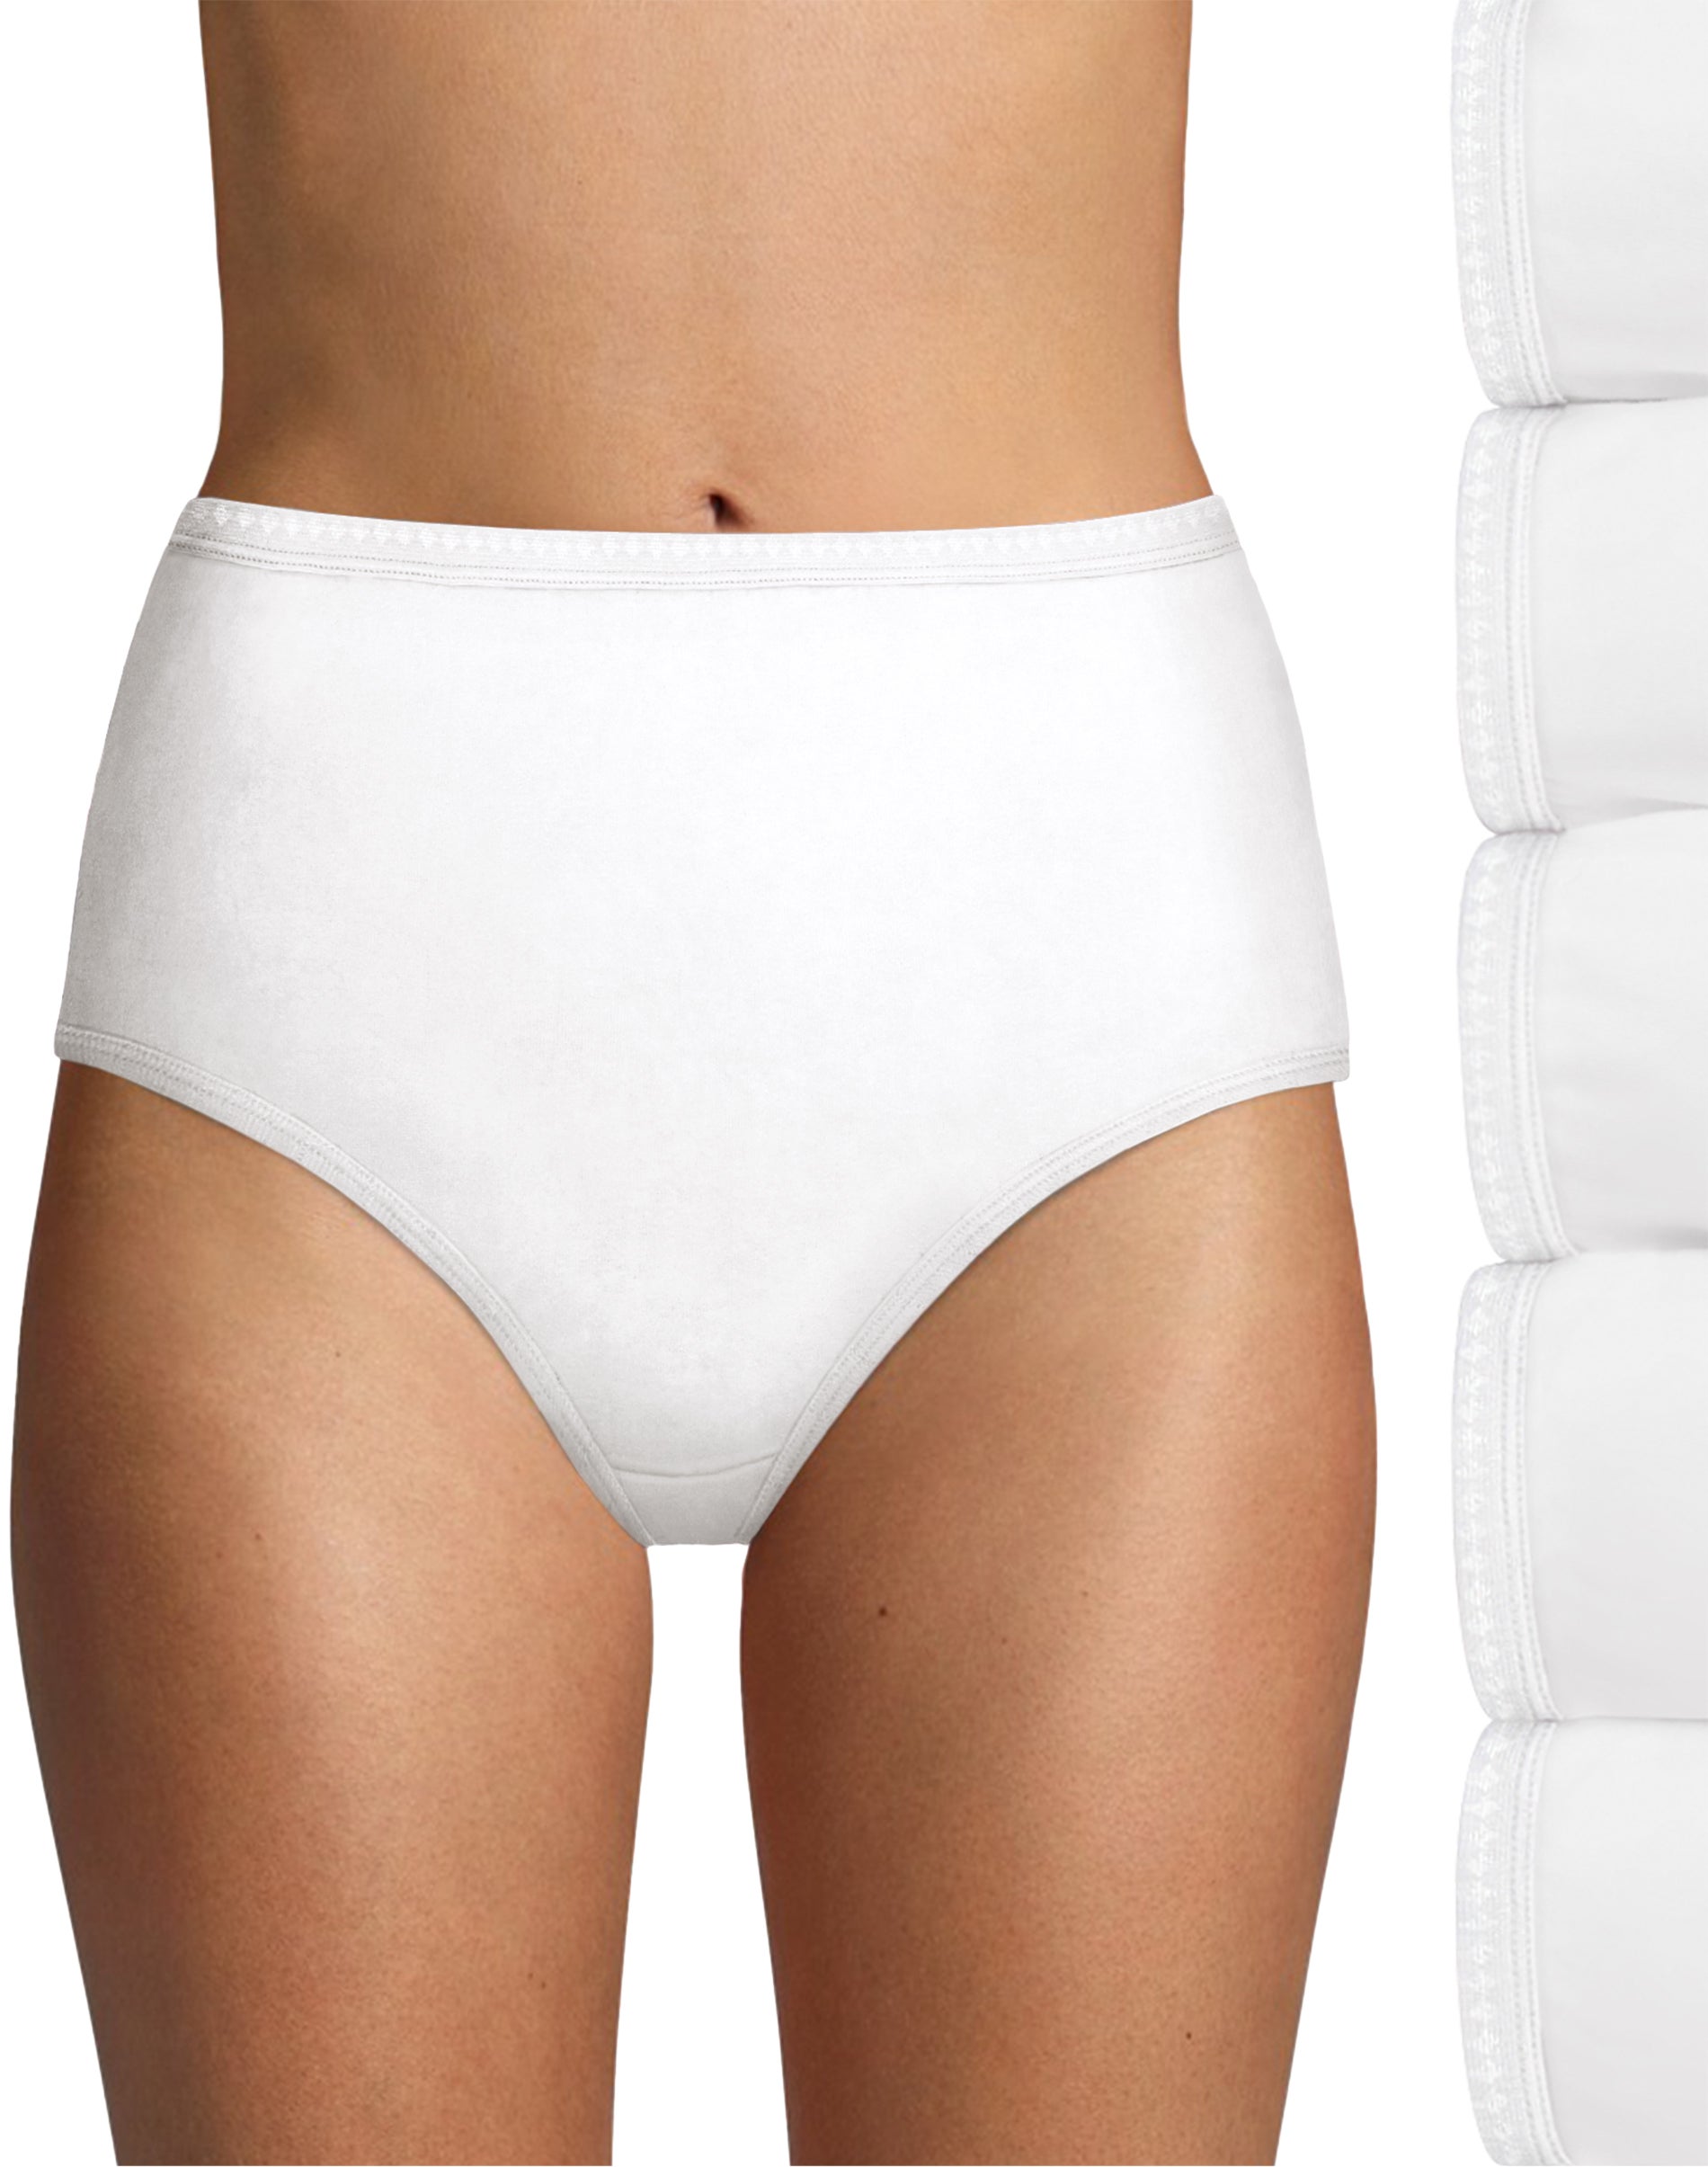 Hanes Ultimate Women's 6-Pack Breathable Cotton Bikini Panty